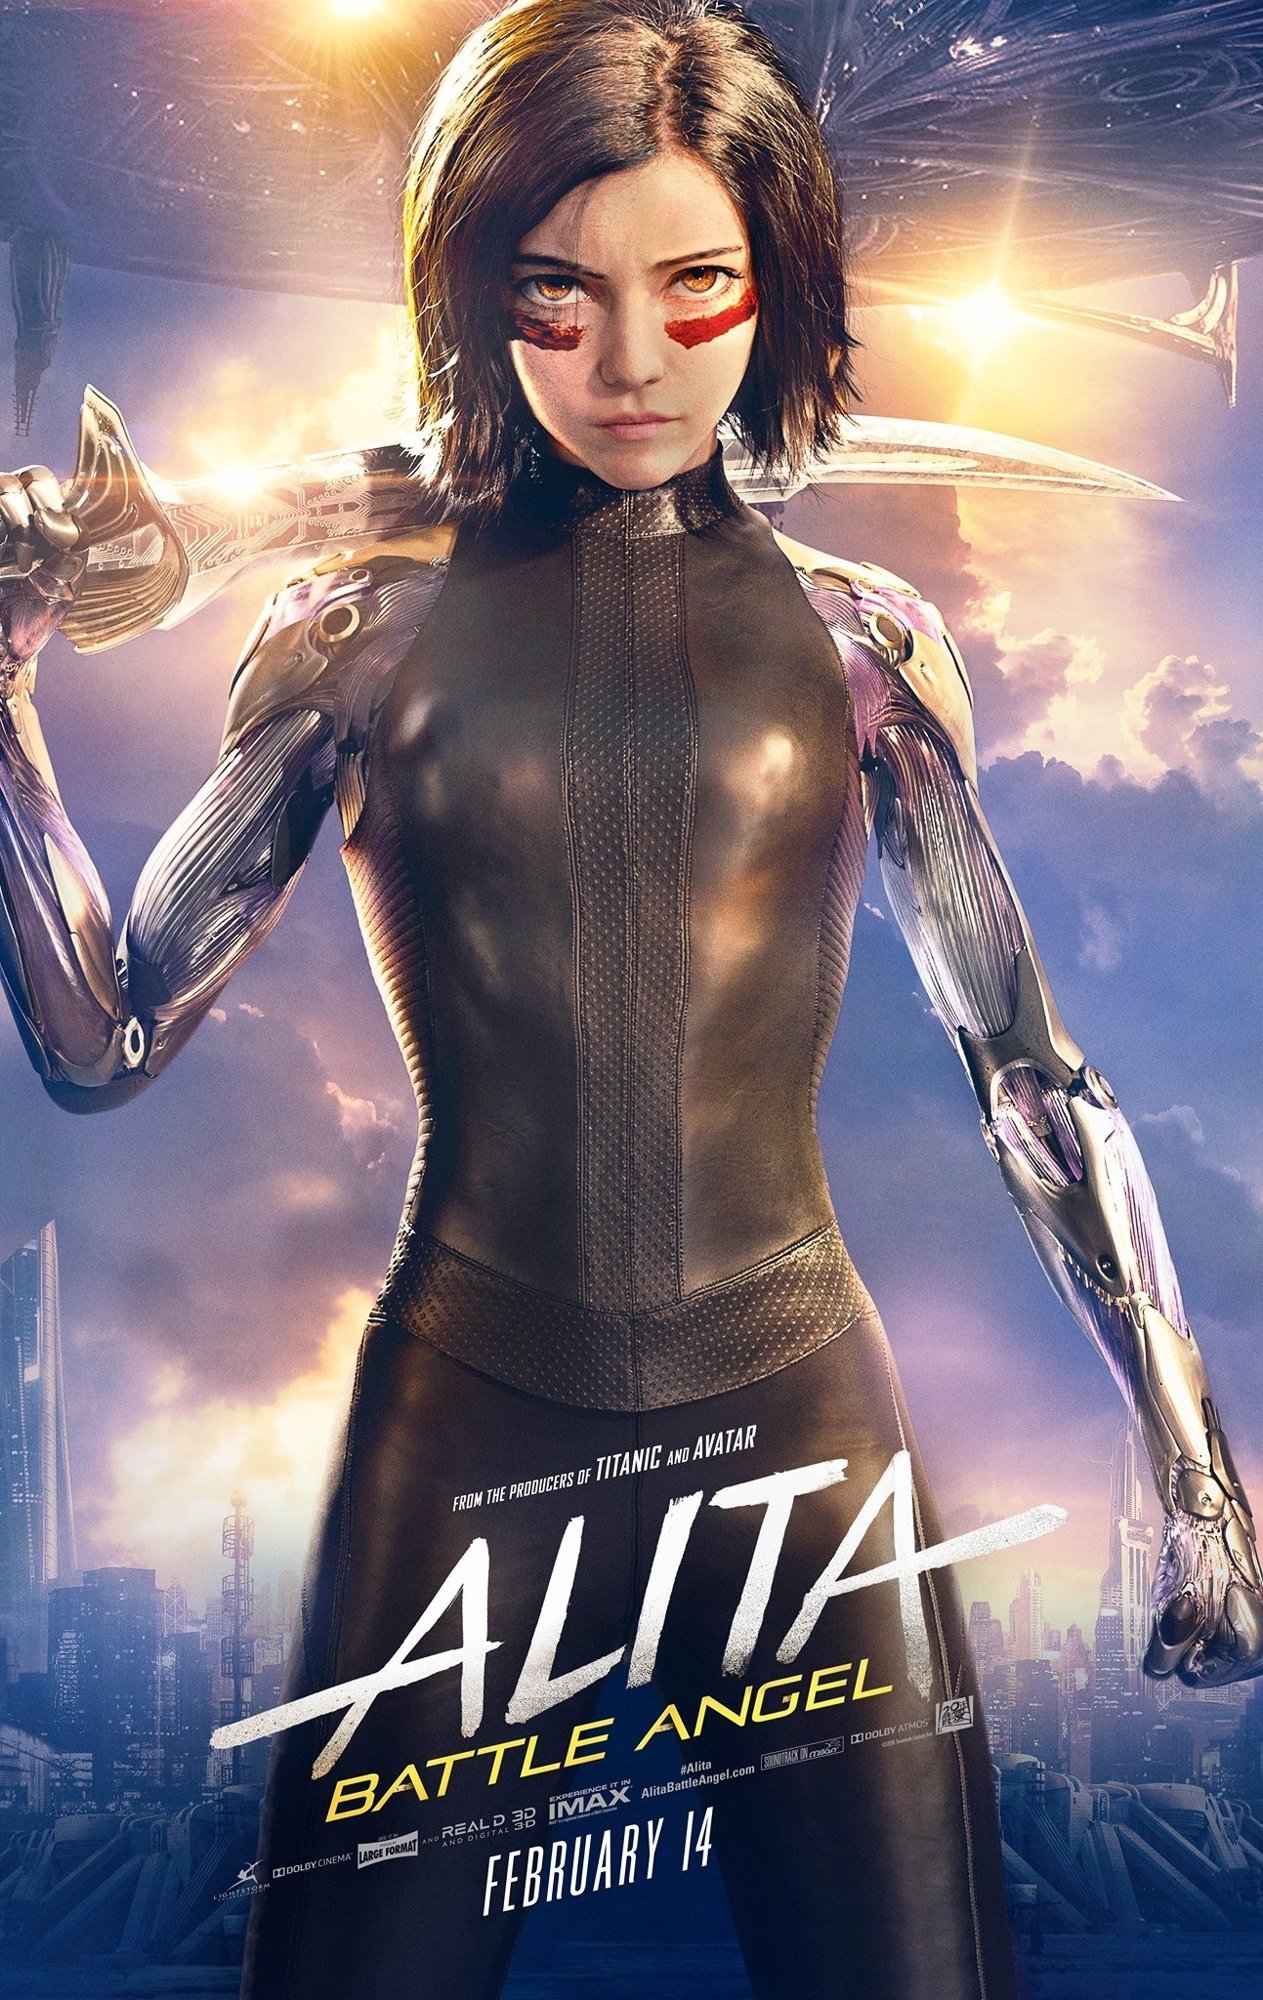 Alita: Battle Angel (2019) Pictures, Photo, Image and Movie Stills